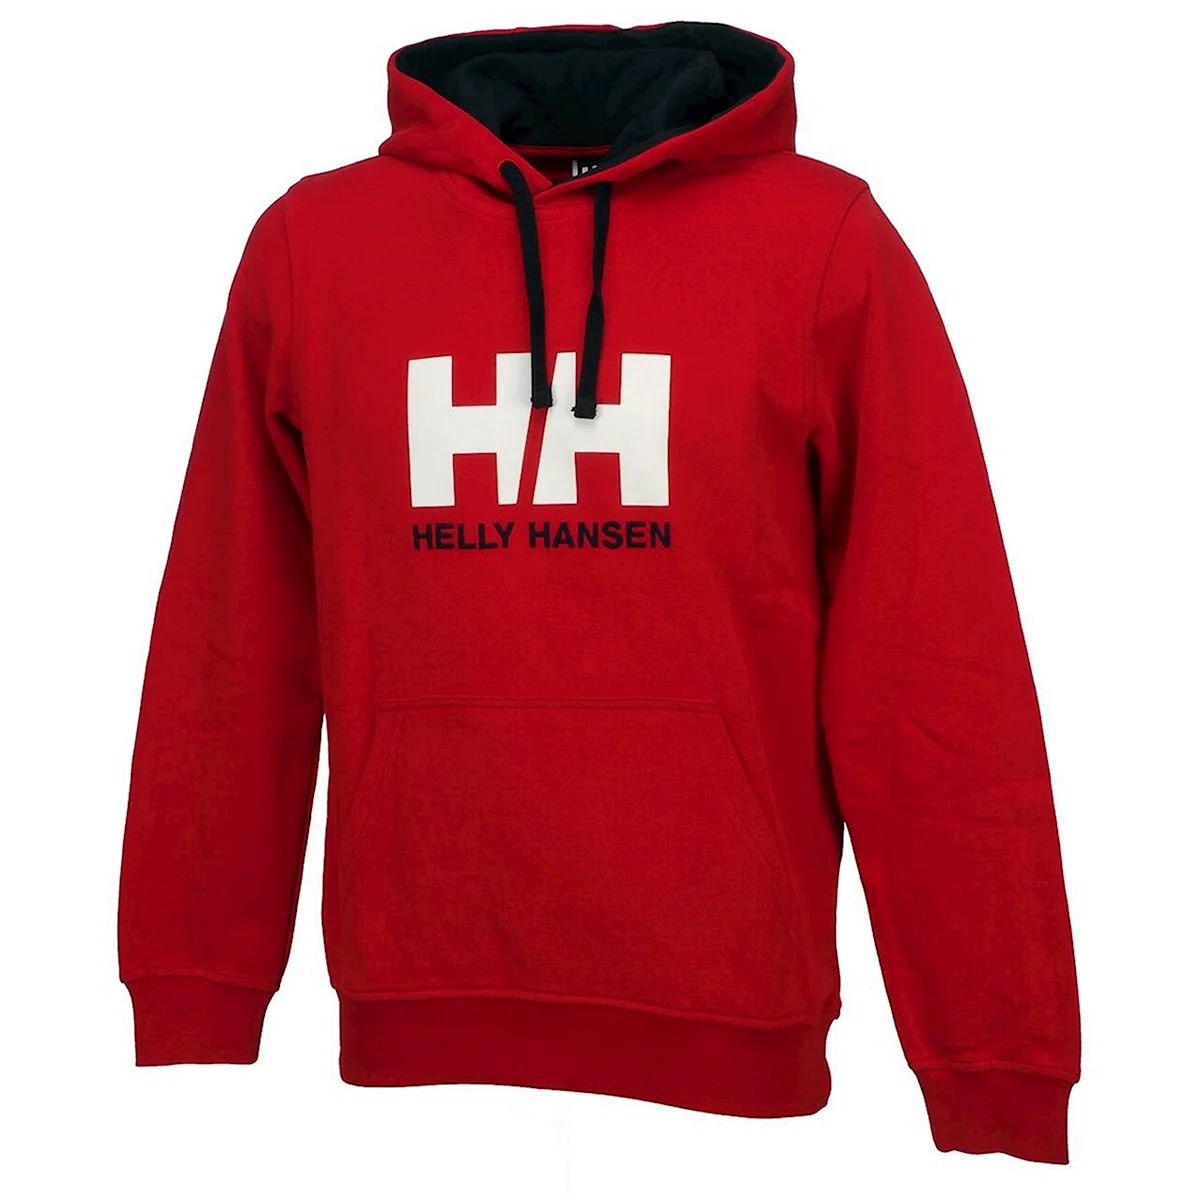 Helly Hansen zip Hoodie Red